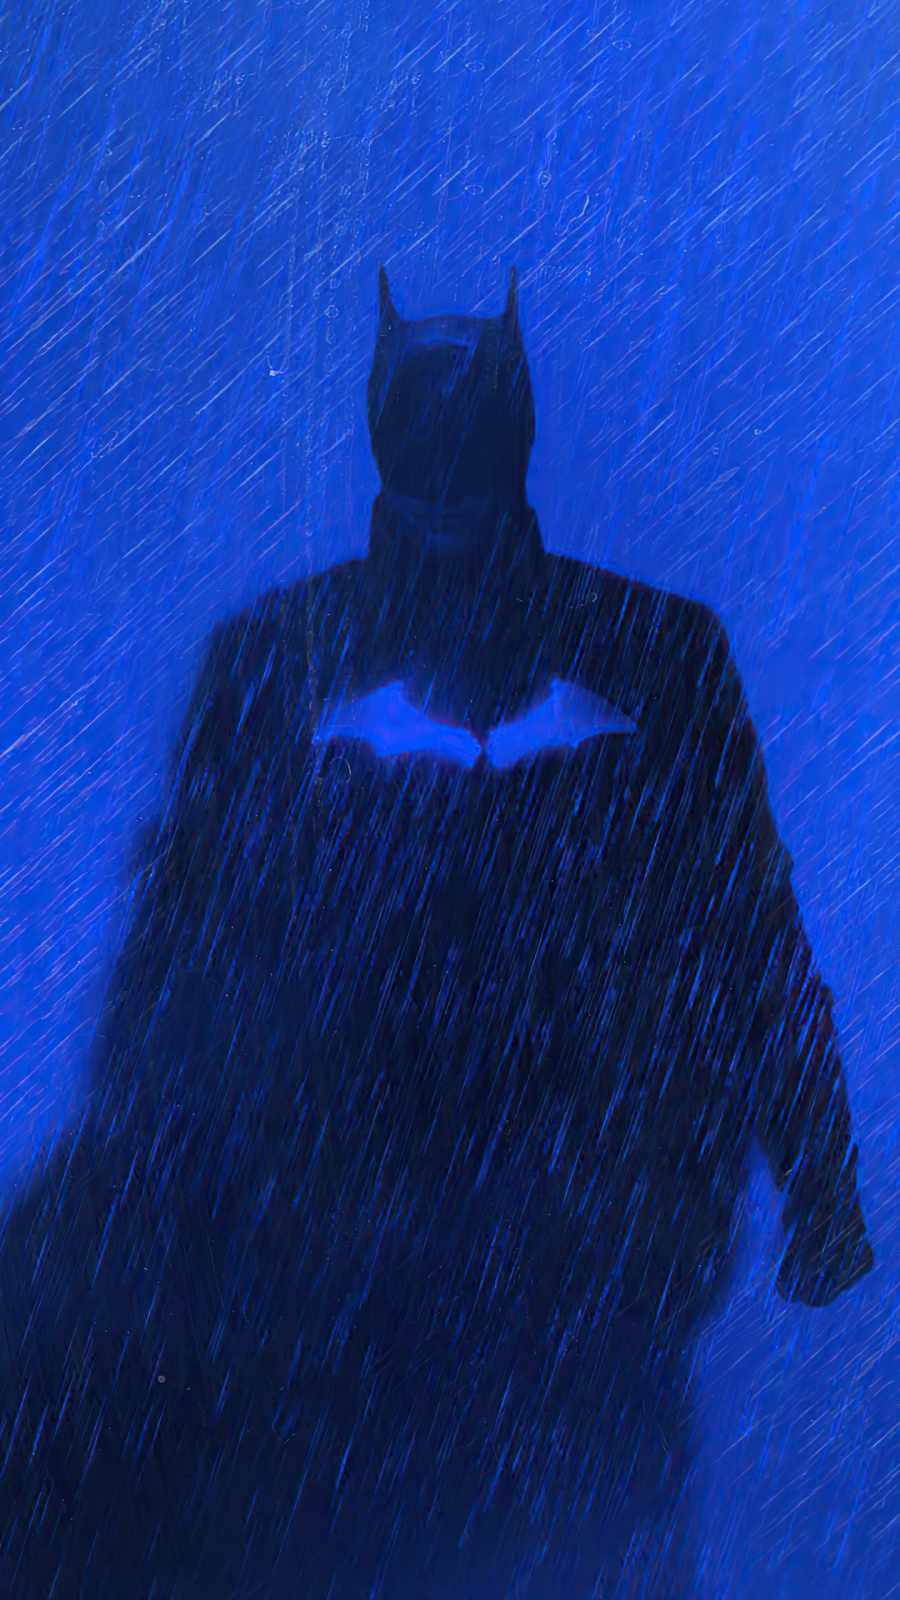 The Batman 2022 Blue IPhone Wallpaper Wallpaper, iPhone Wallpaper